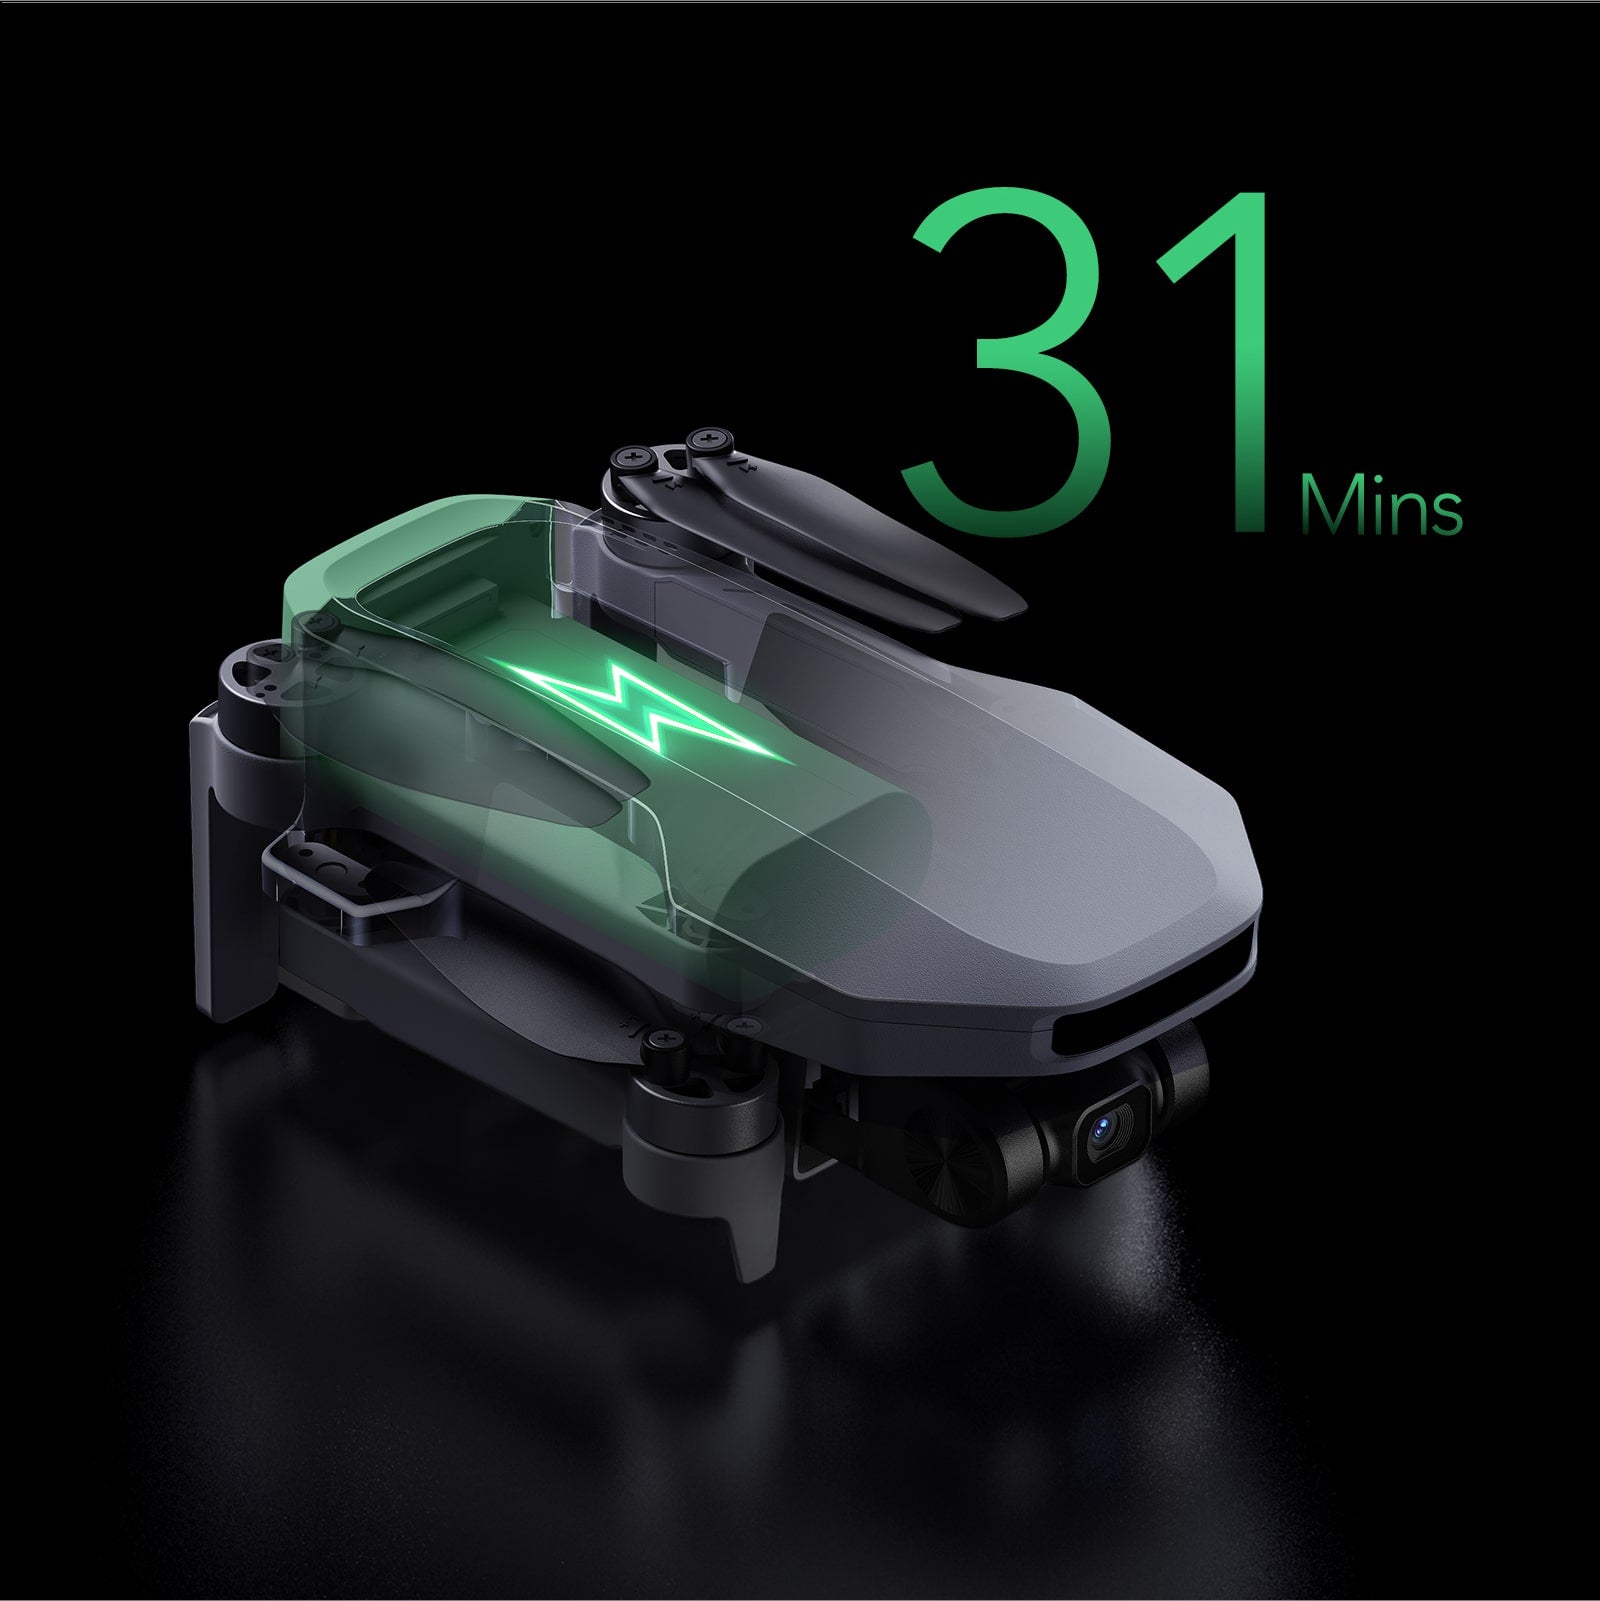 ATOM SE Sub 250g Foldable GPS Drone with 4K HD EIS Camera – Potensic